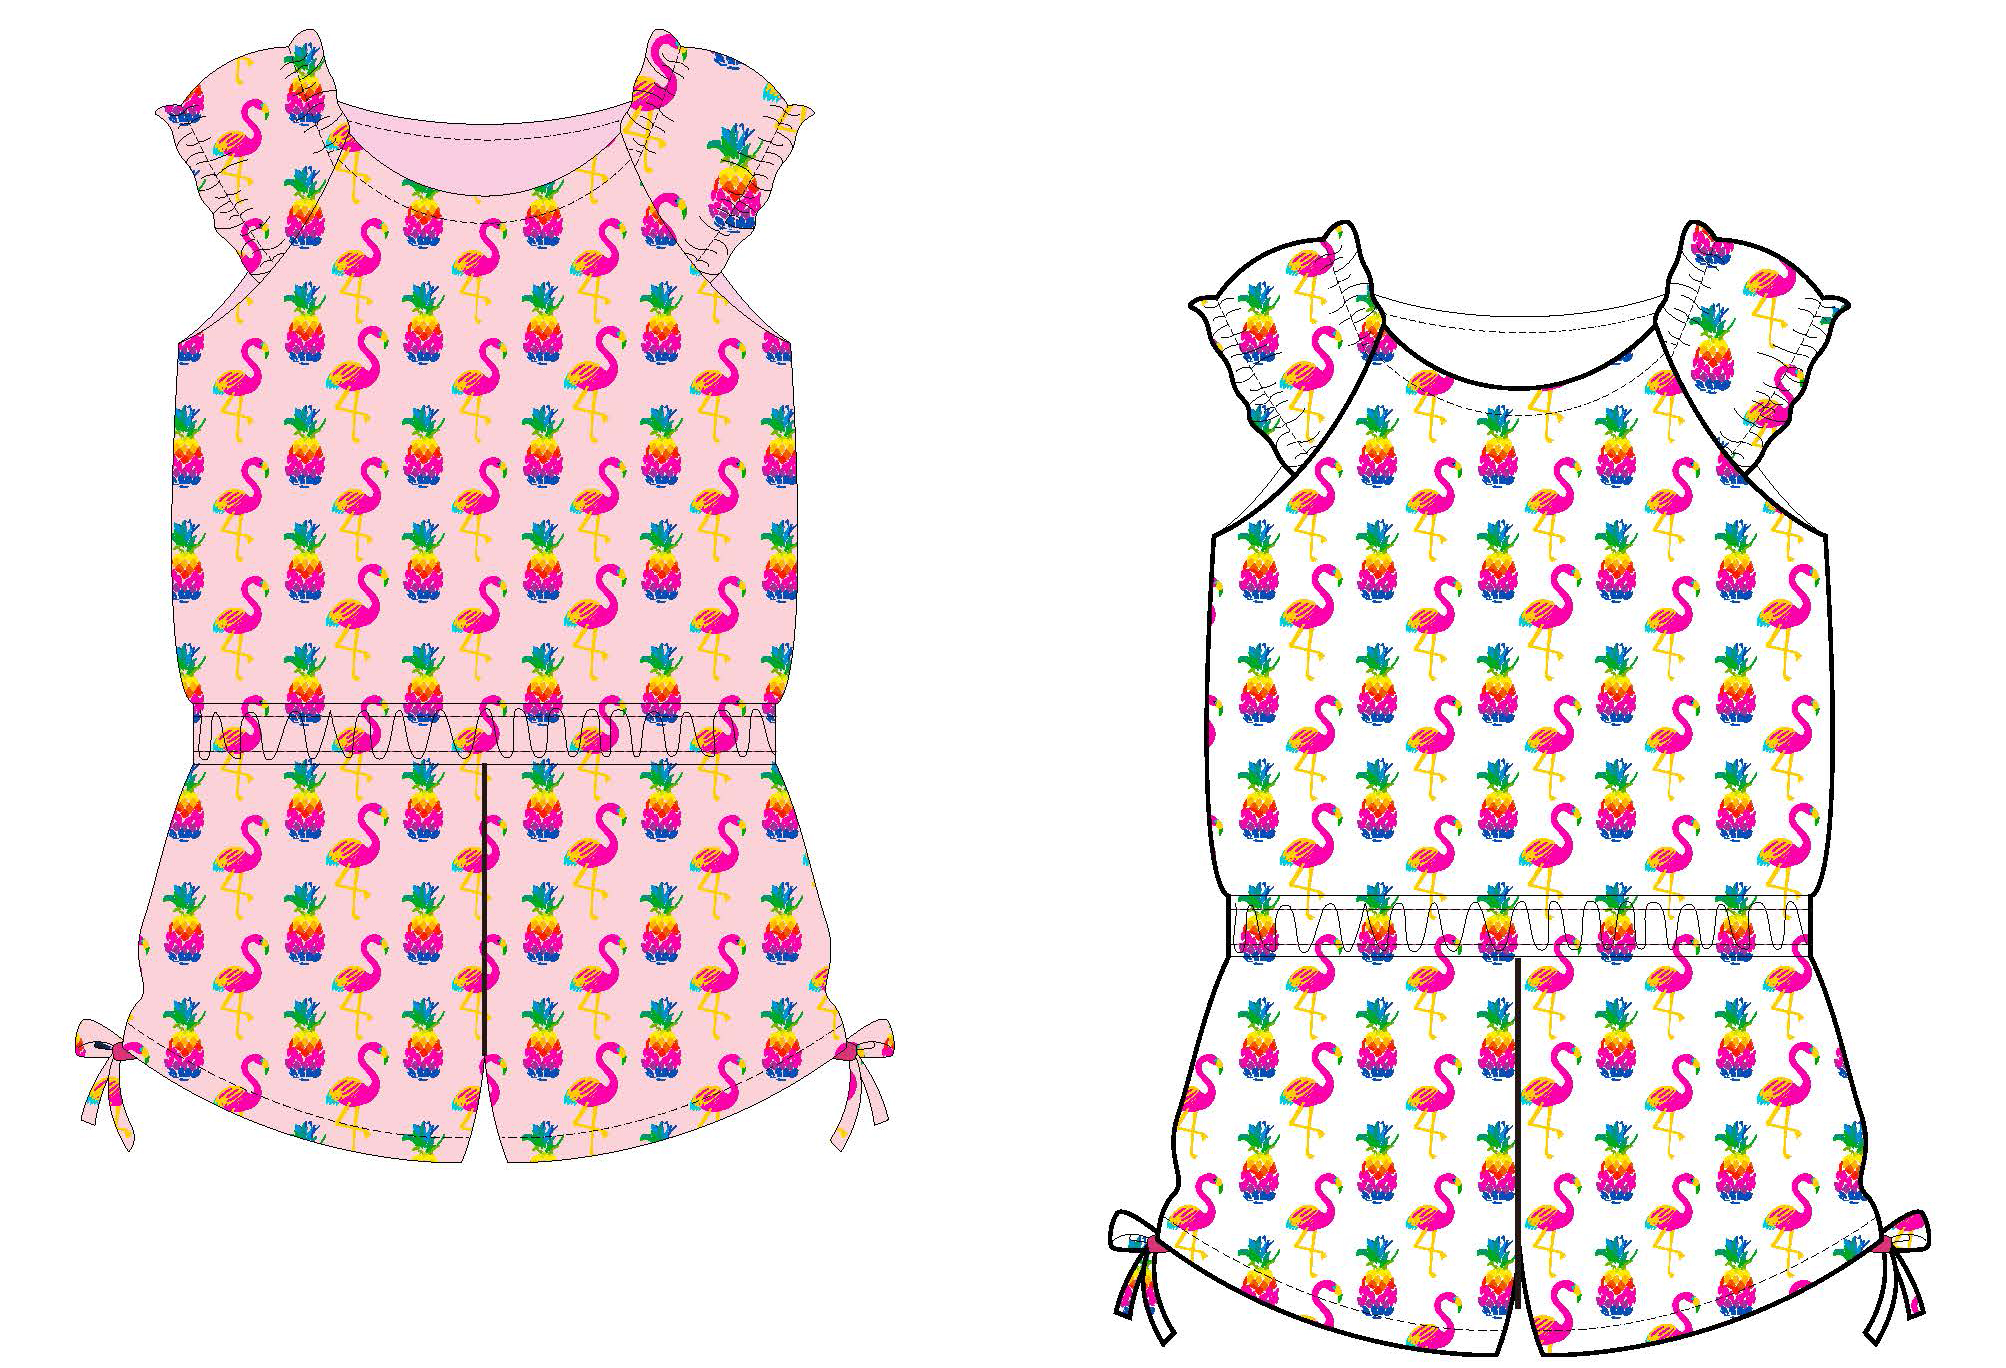 Baby Girl's Printed Knit Romper DRESS w/ Rainbow Flamingo & Pineapple Print - Size 0/3M-9M